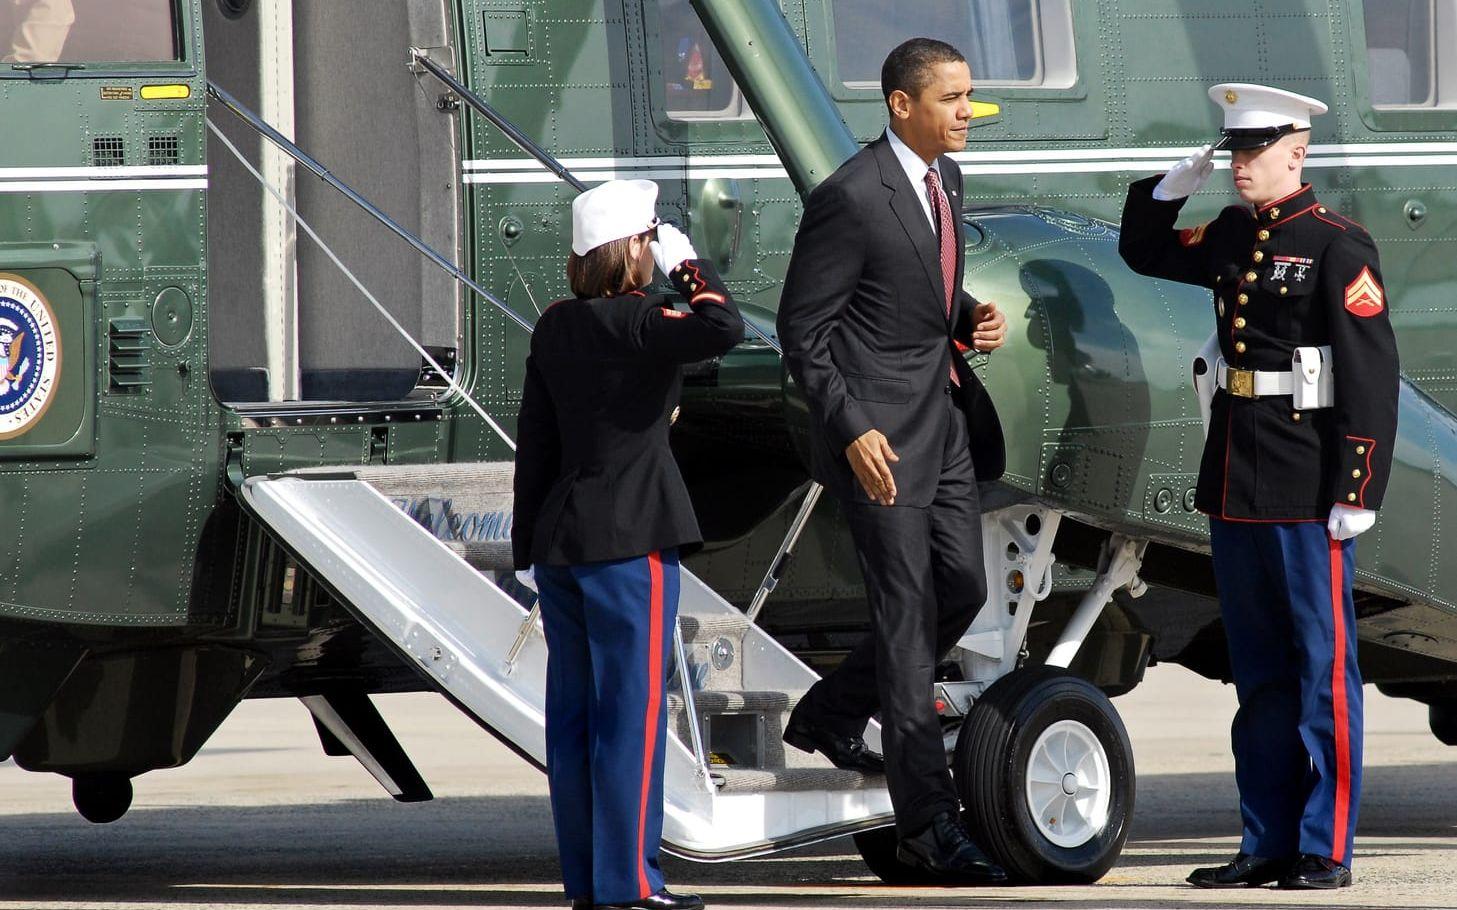 Barack Obama 2009. Bild: TT